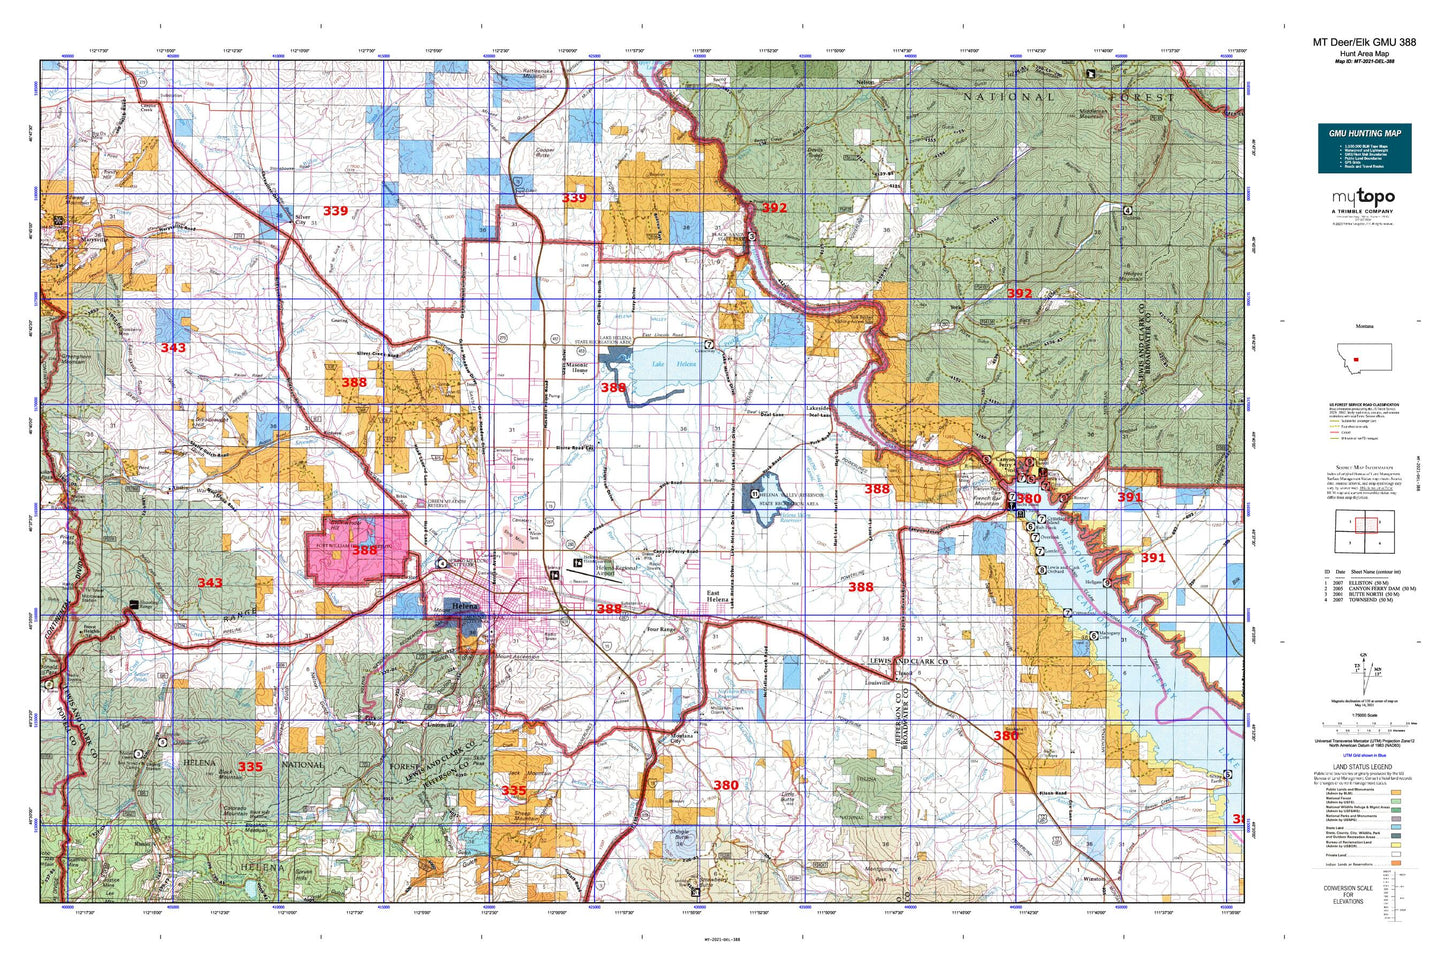 Montana Deer/Elk GMU 388 Map Image